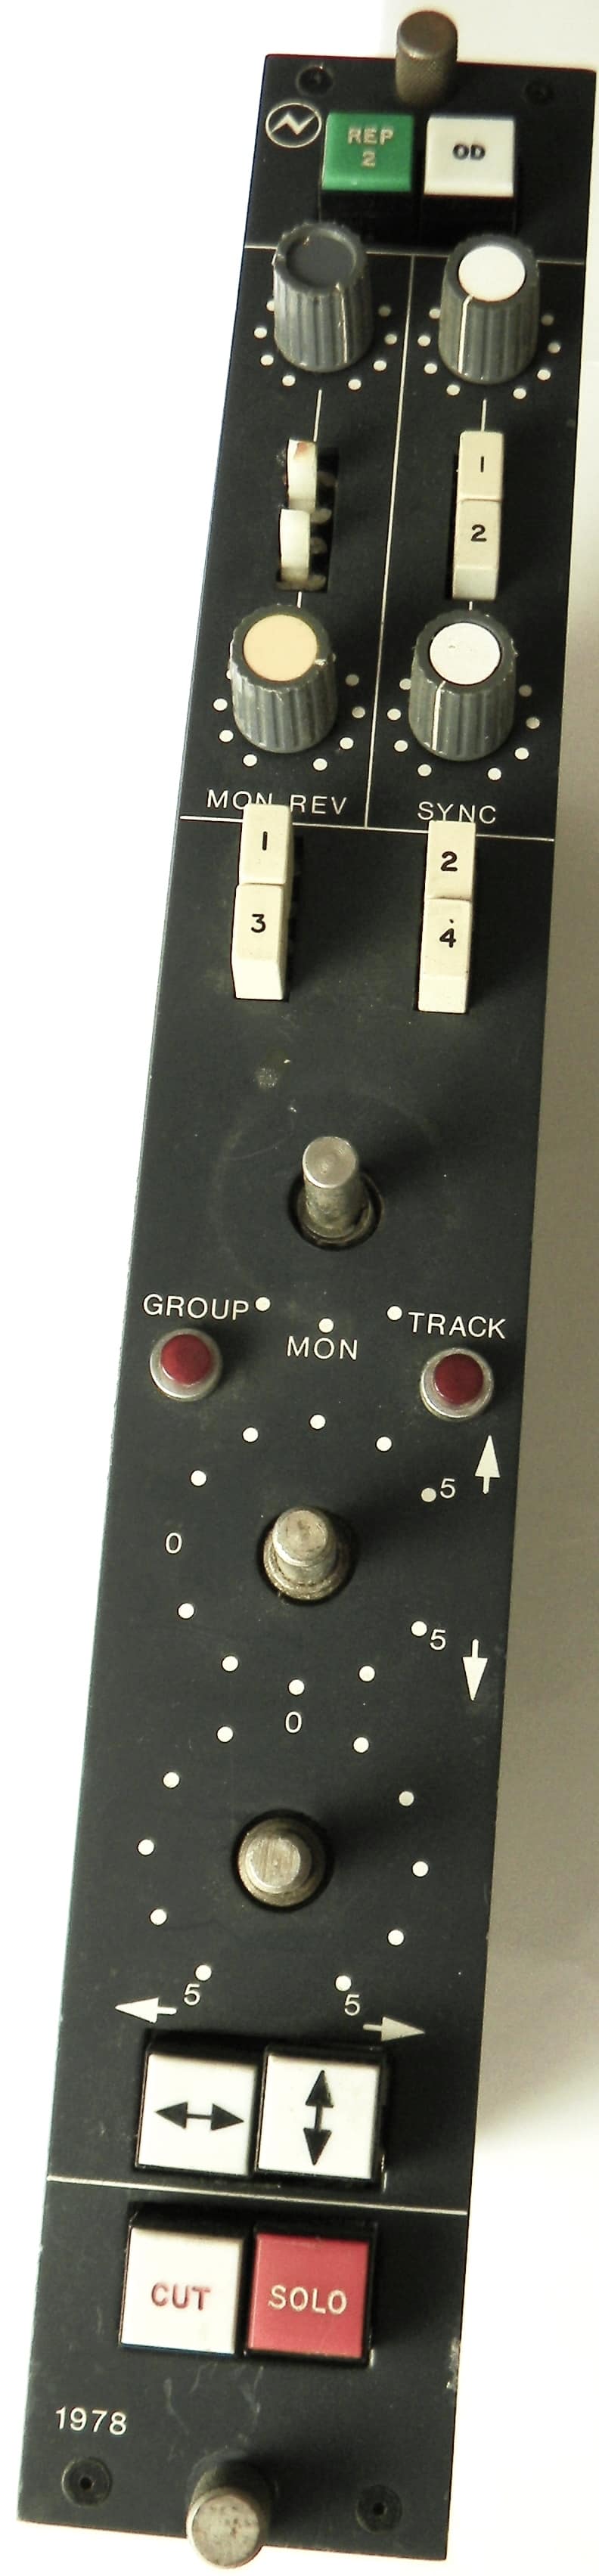 Neve EMI custom monitor module